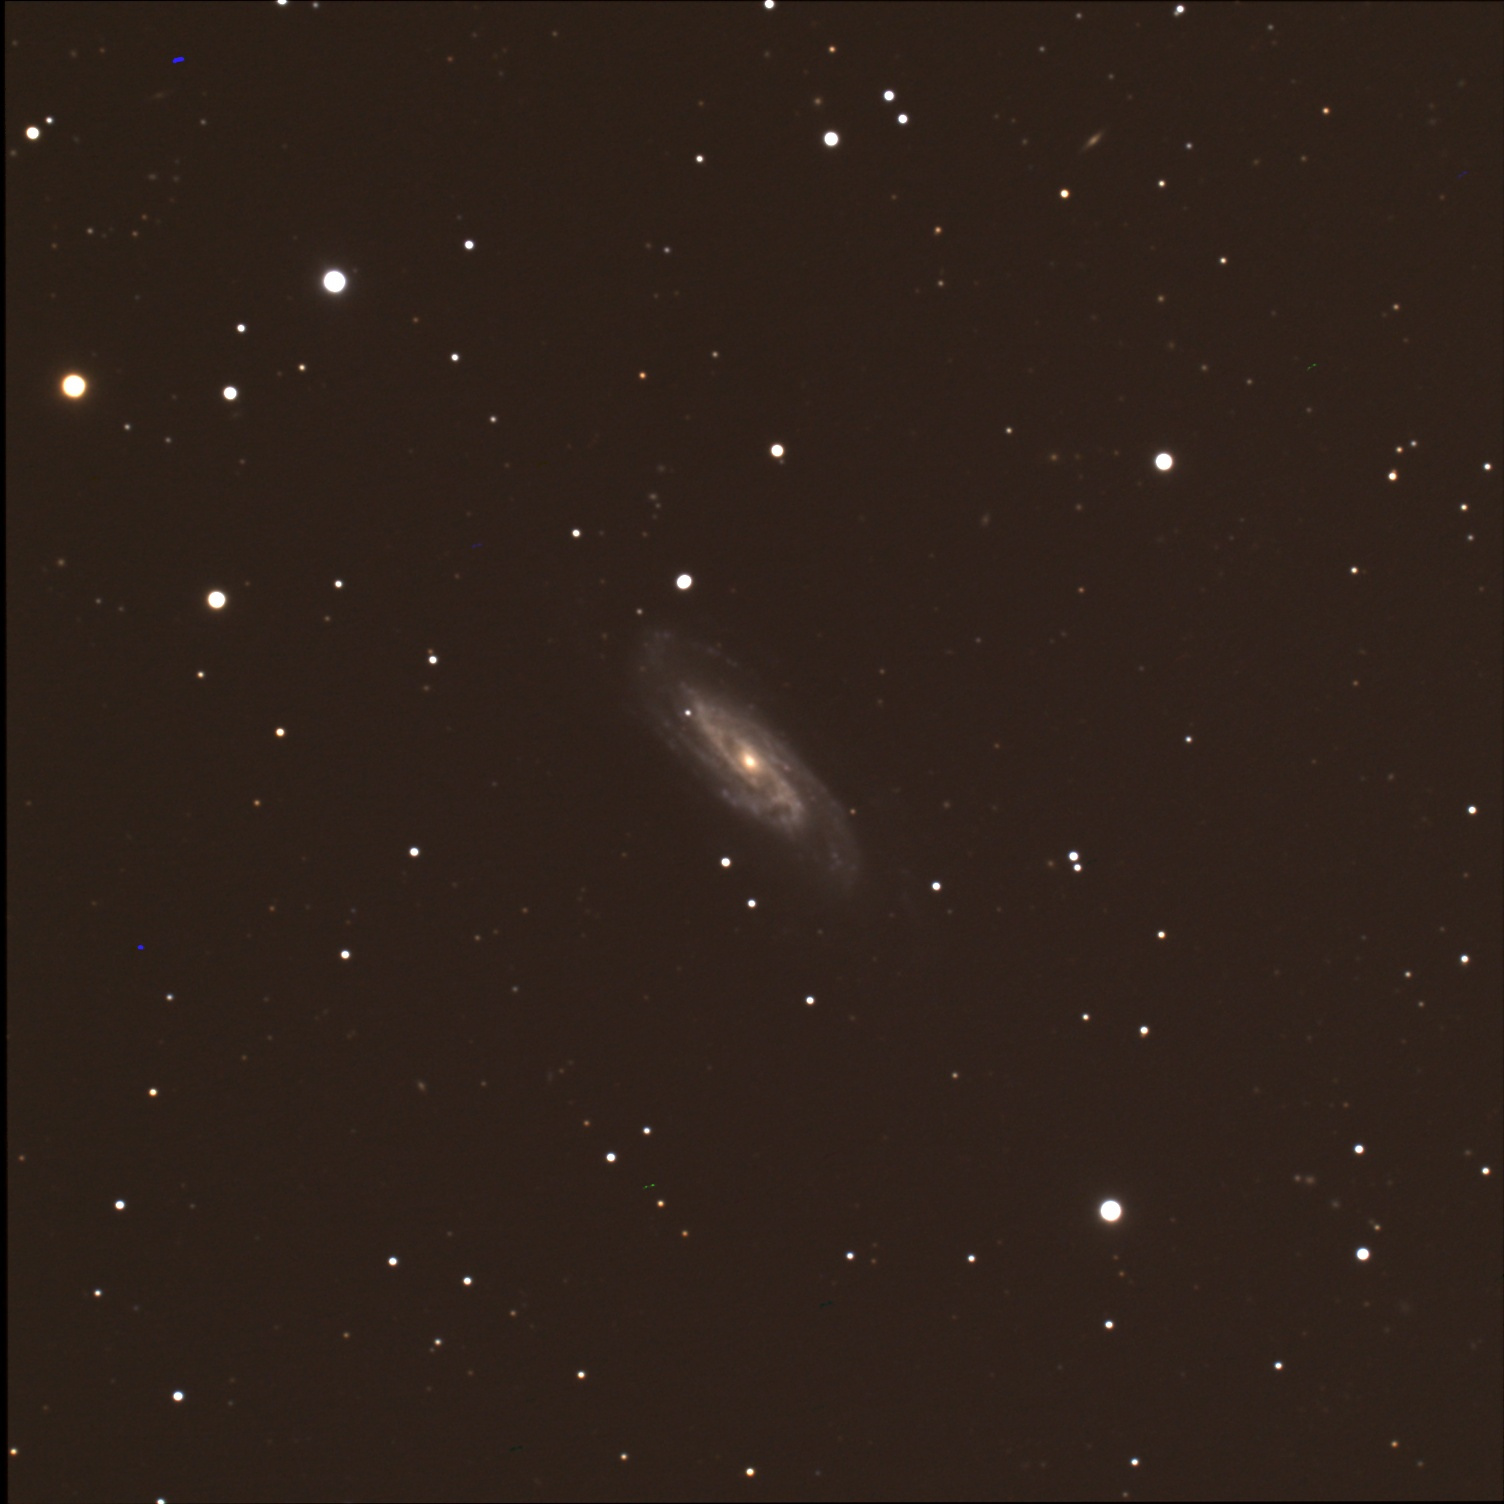 Light_NGC3198_120sec_Bin2_-9.8C_gain100_2022-03-07_212252_frame0017_list__tr10__sigma_100r__49reg.jpg.6de4e524cbb05383a3d2009c5617628c.jpg